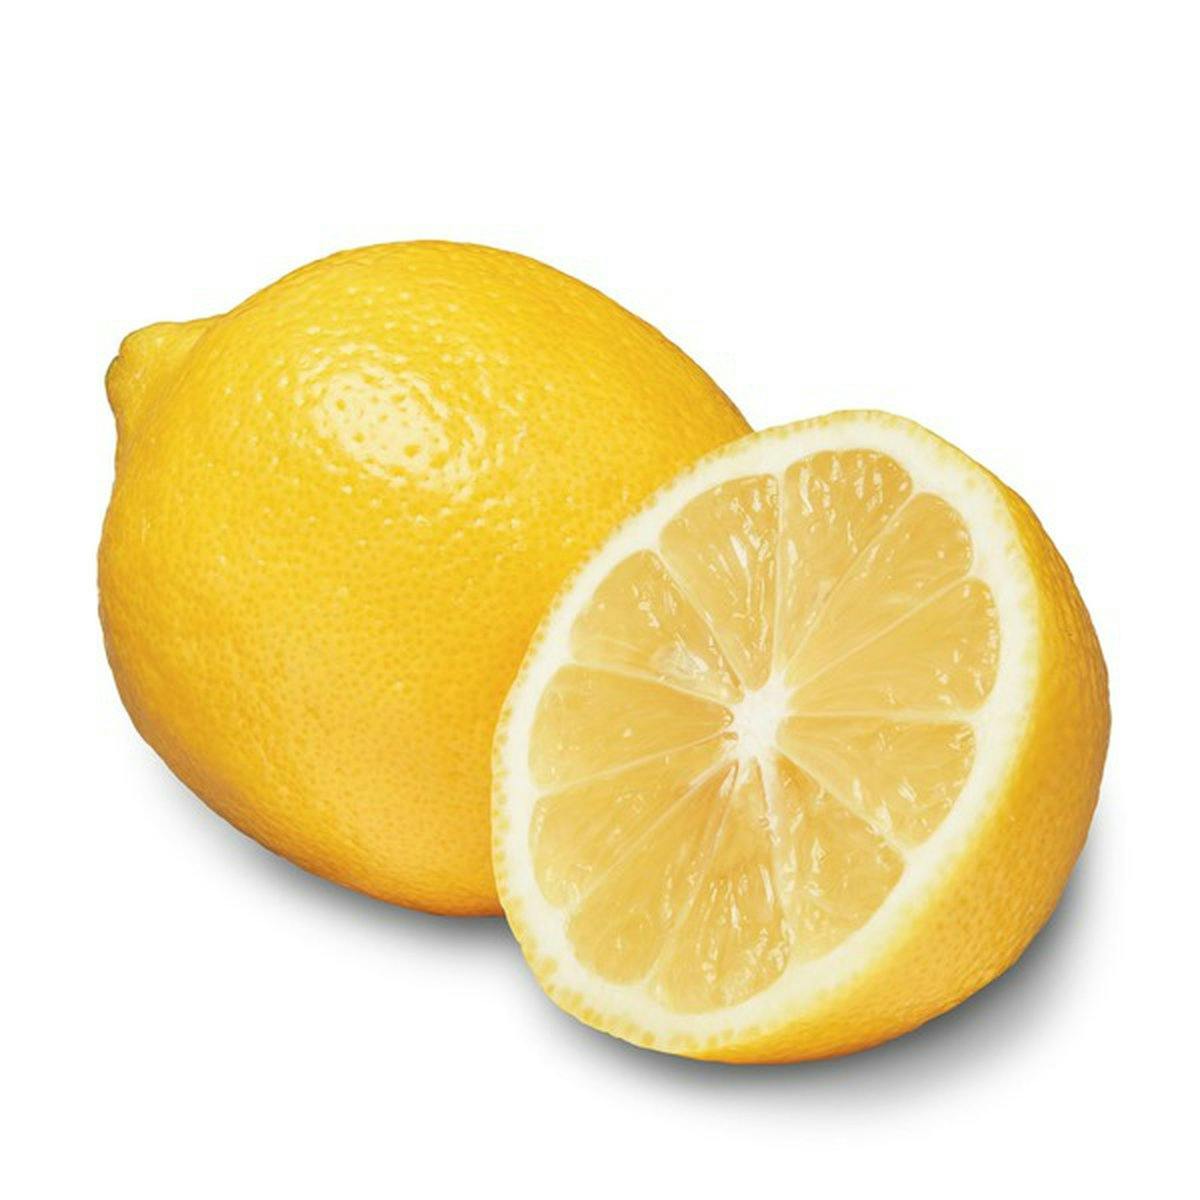 pulverized dehydrated lemon peel